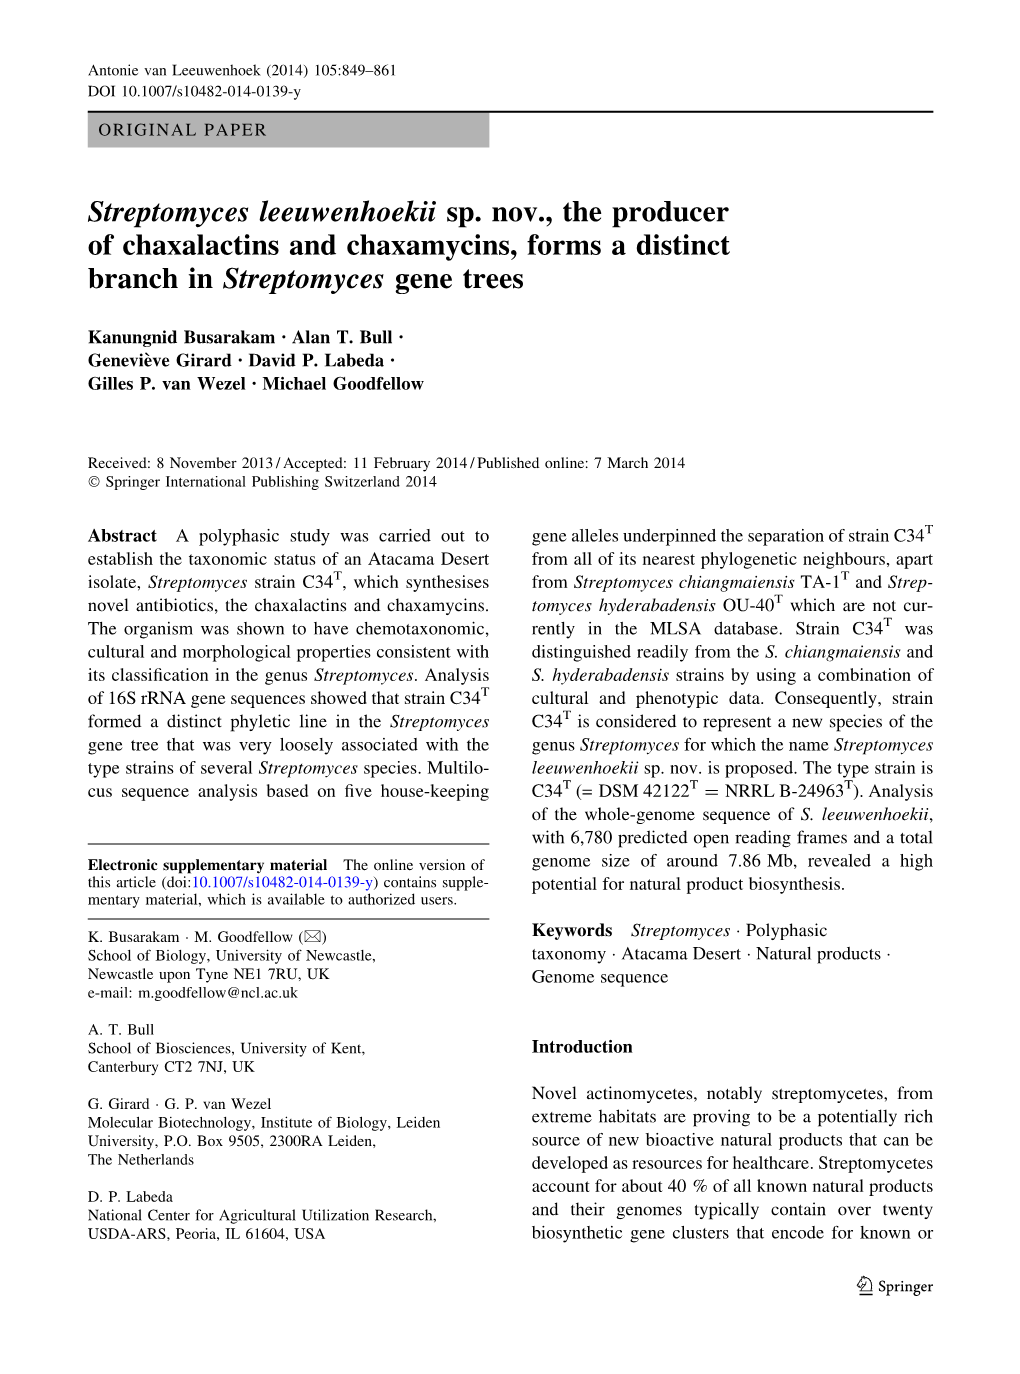 Streptomyces Leeuwenhoekii Sp. Nov., the Producer of Chaxalactins and Chaxamycins, Forms a Distinct Branch in Streptomyces Gene Trees